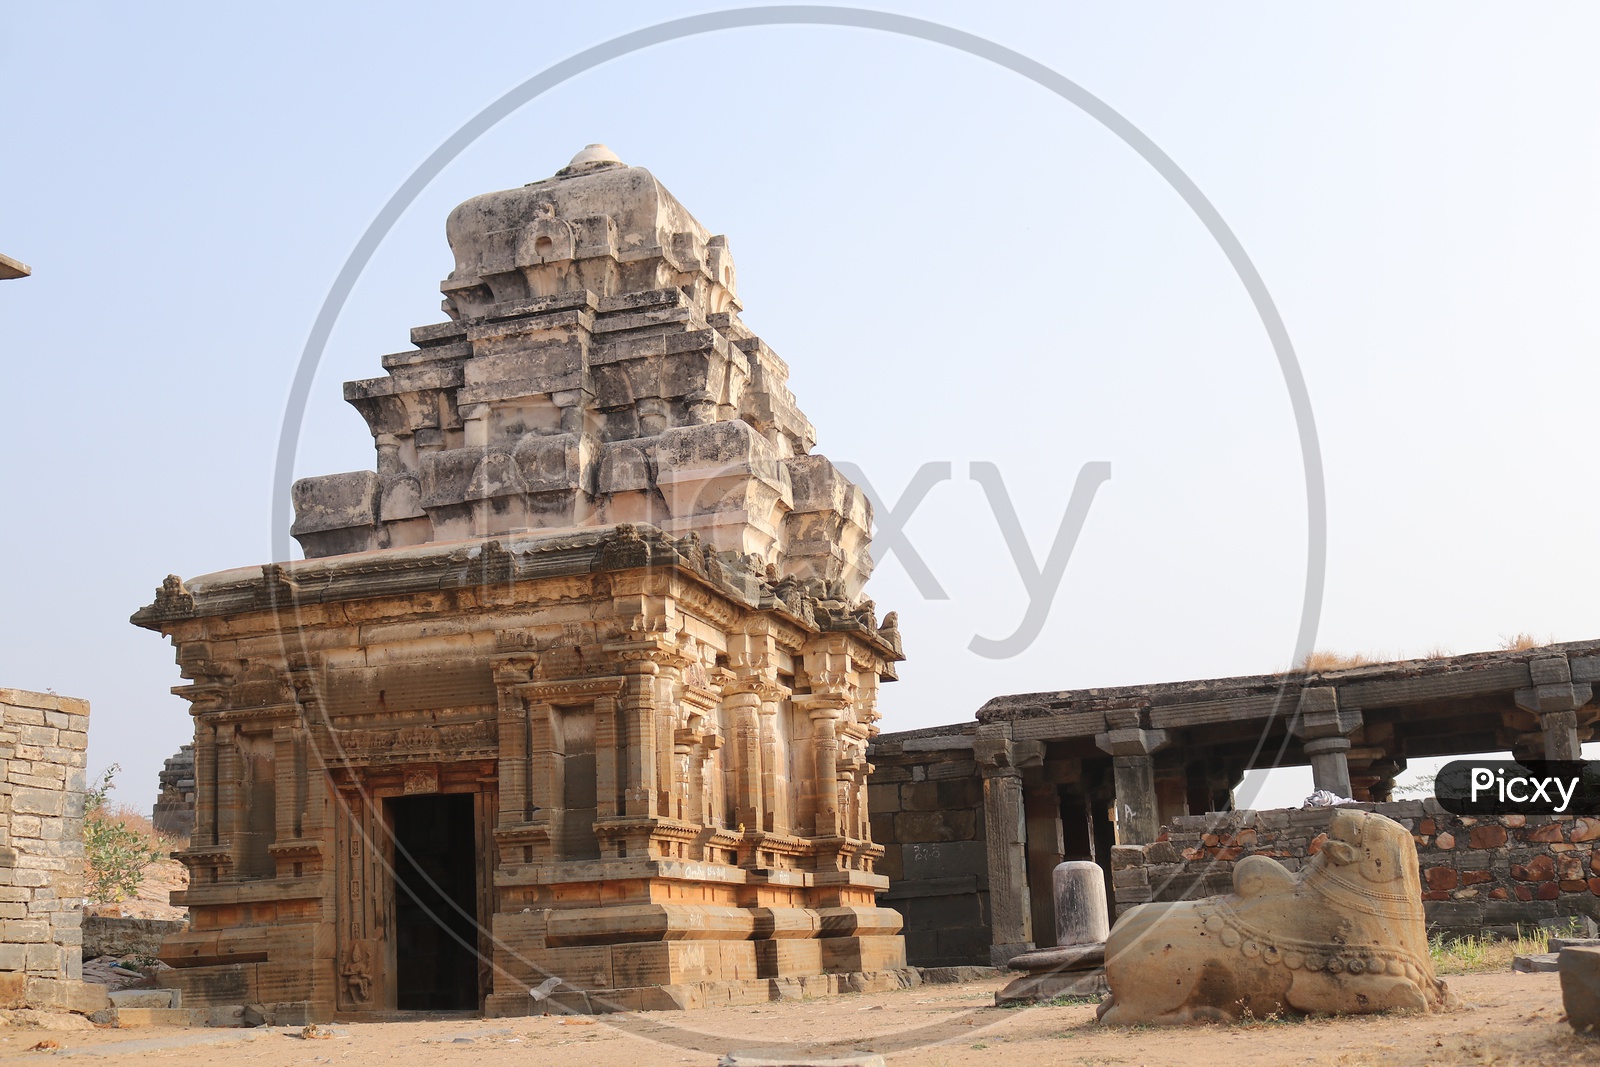 Architecture of Pushpagiri temple